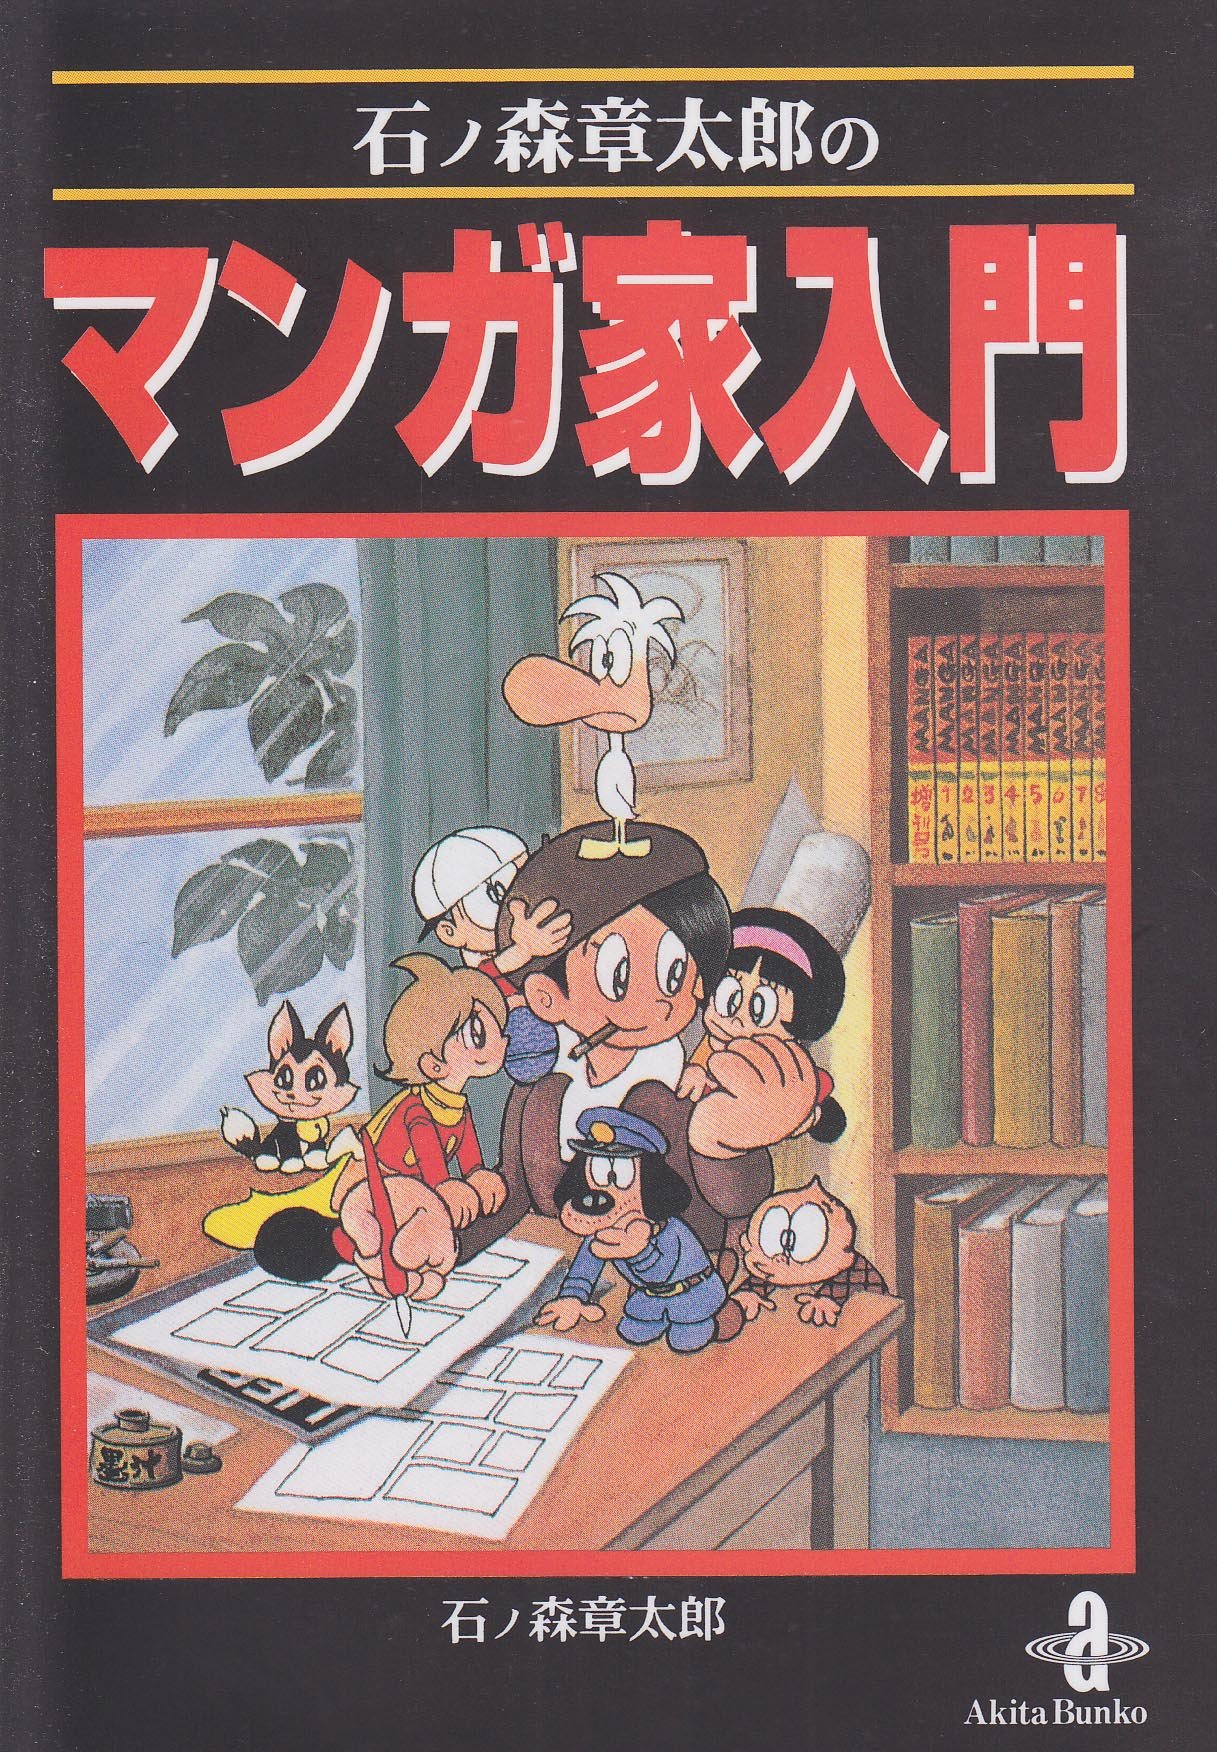 Shotaro Ishinomori's Introduction to Being a Mangaka cover 2